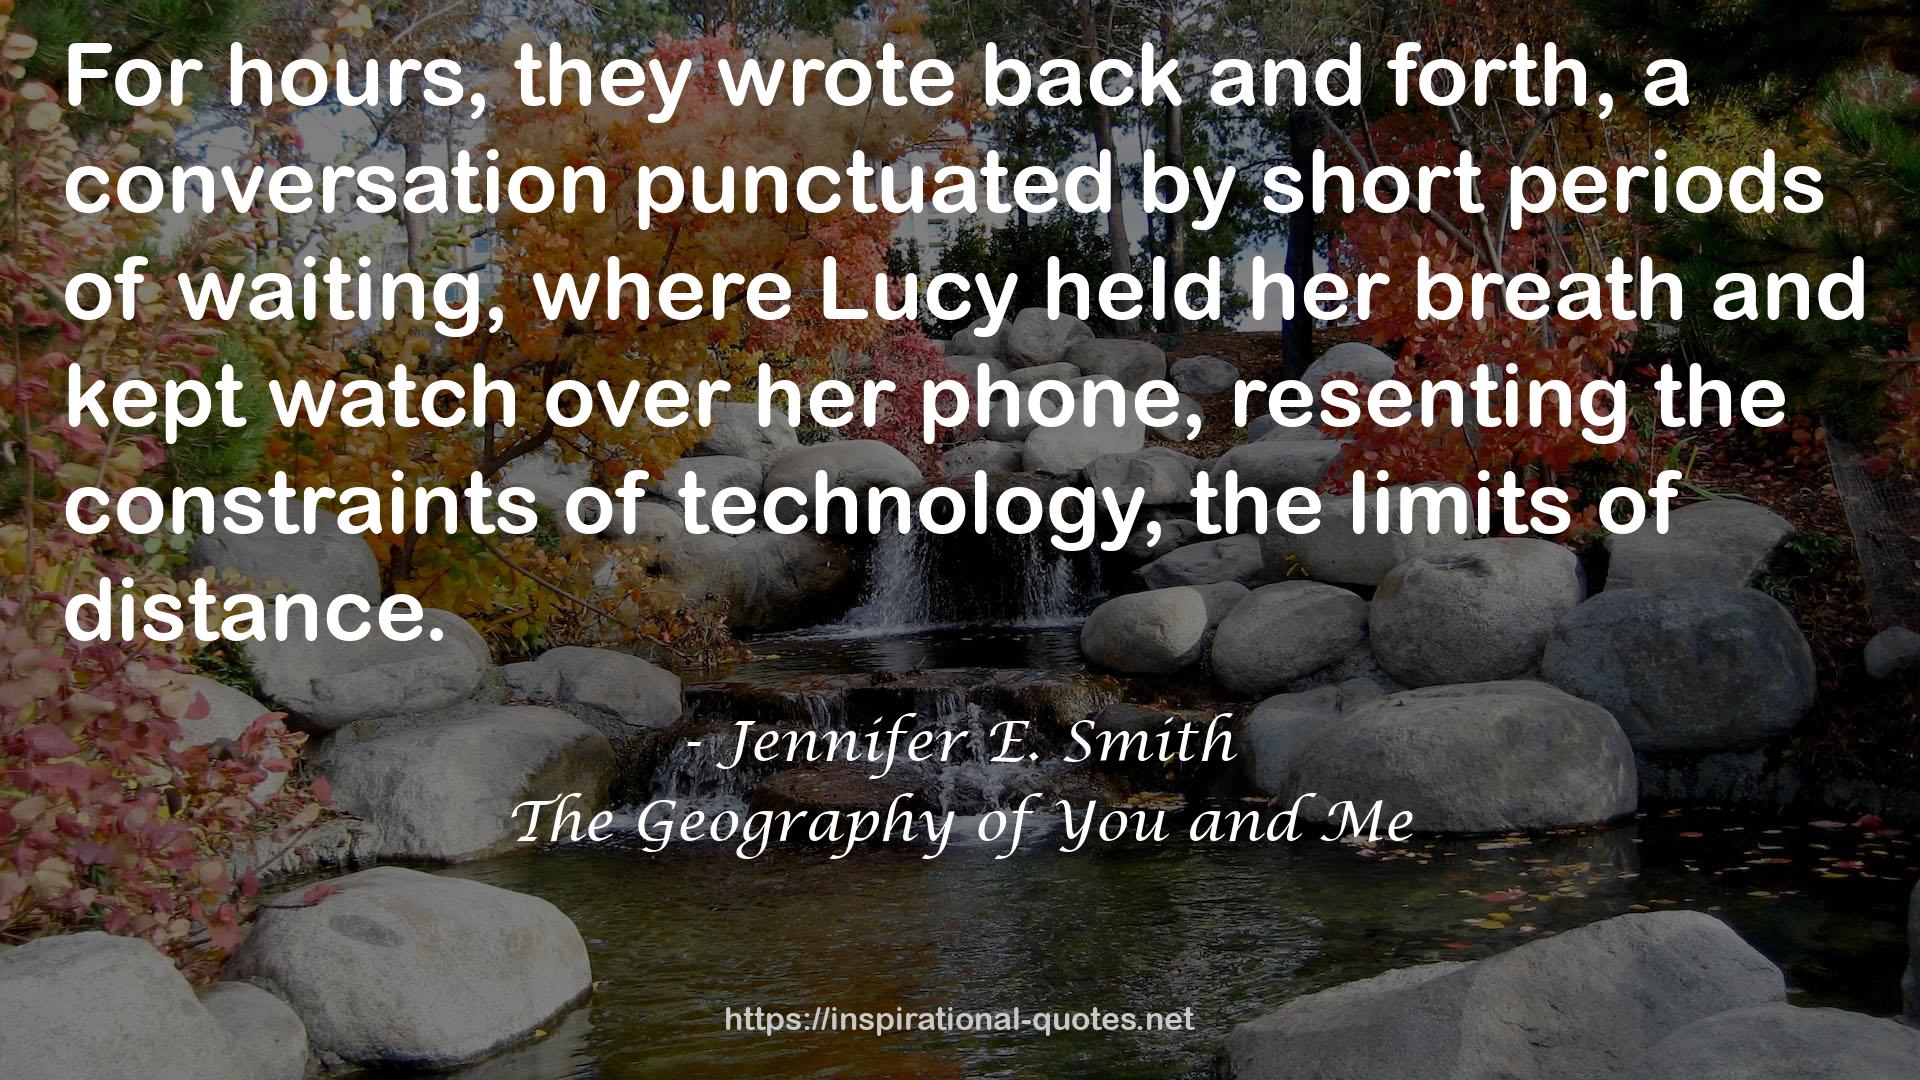 Jennifer E. Smith QUOTES